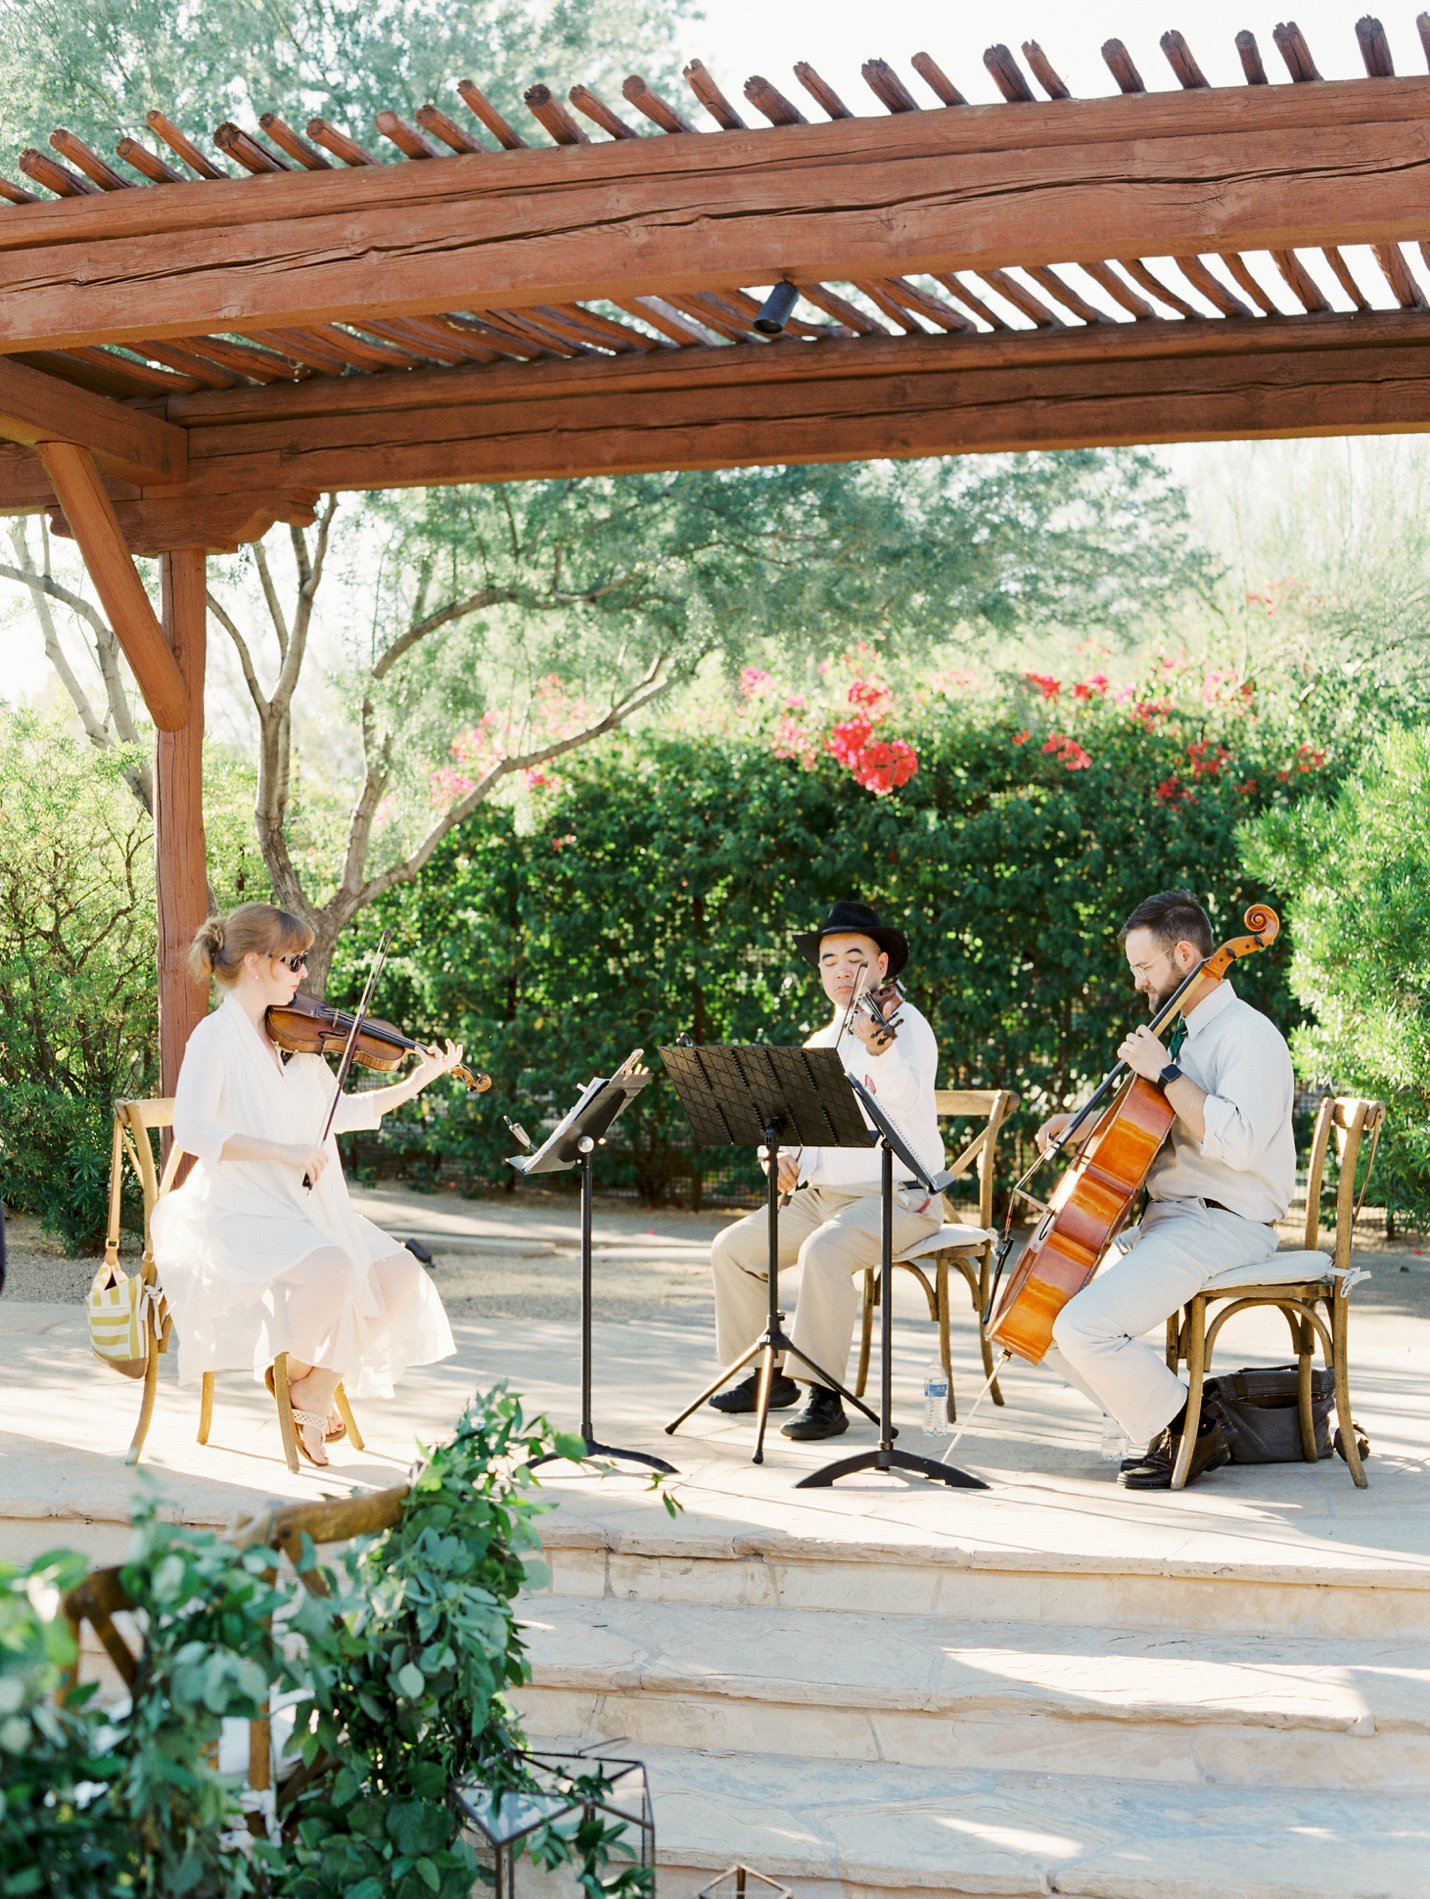 Four Seasons Scottsdale Wedding - Scottsdale Wedding Photographer - Rachel Solomon Photography